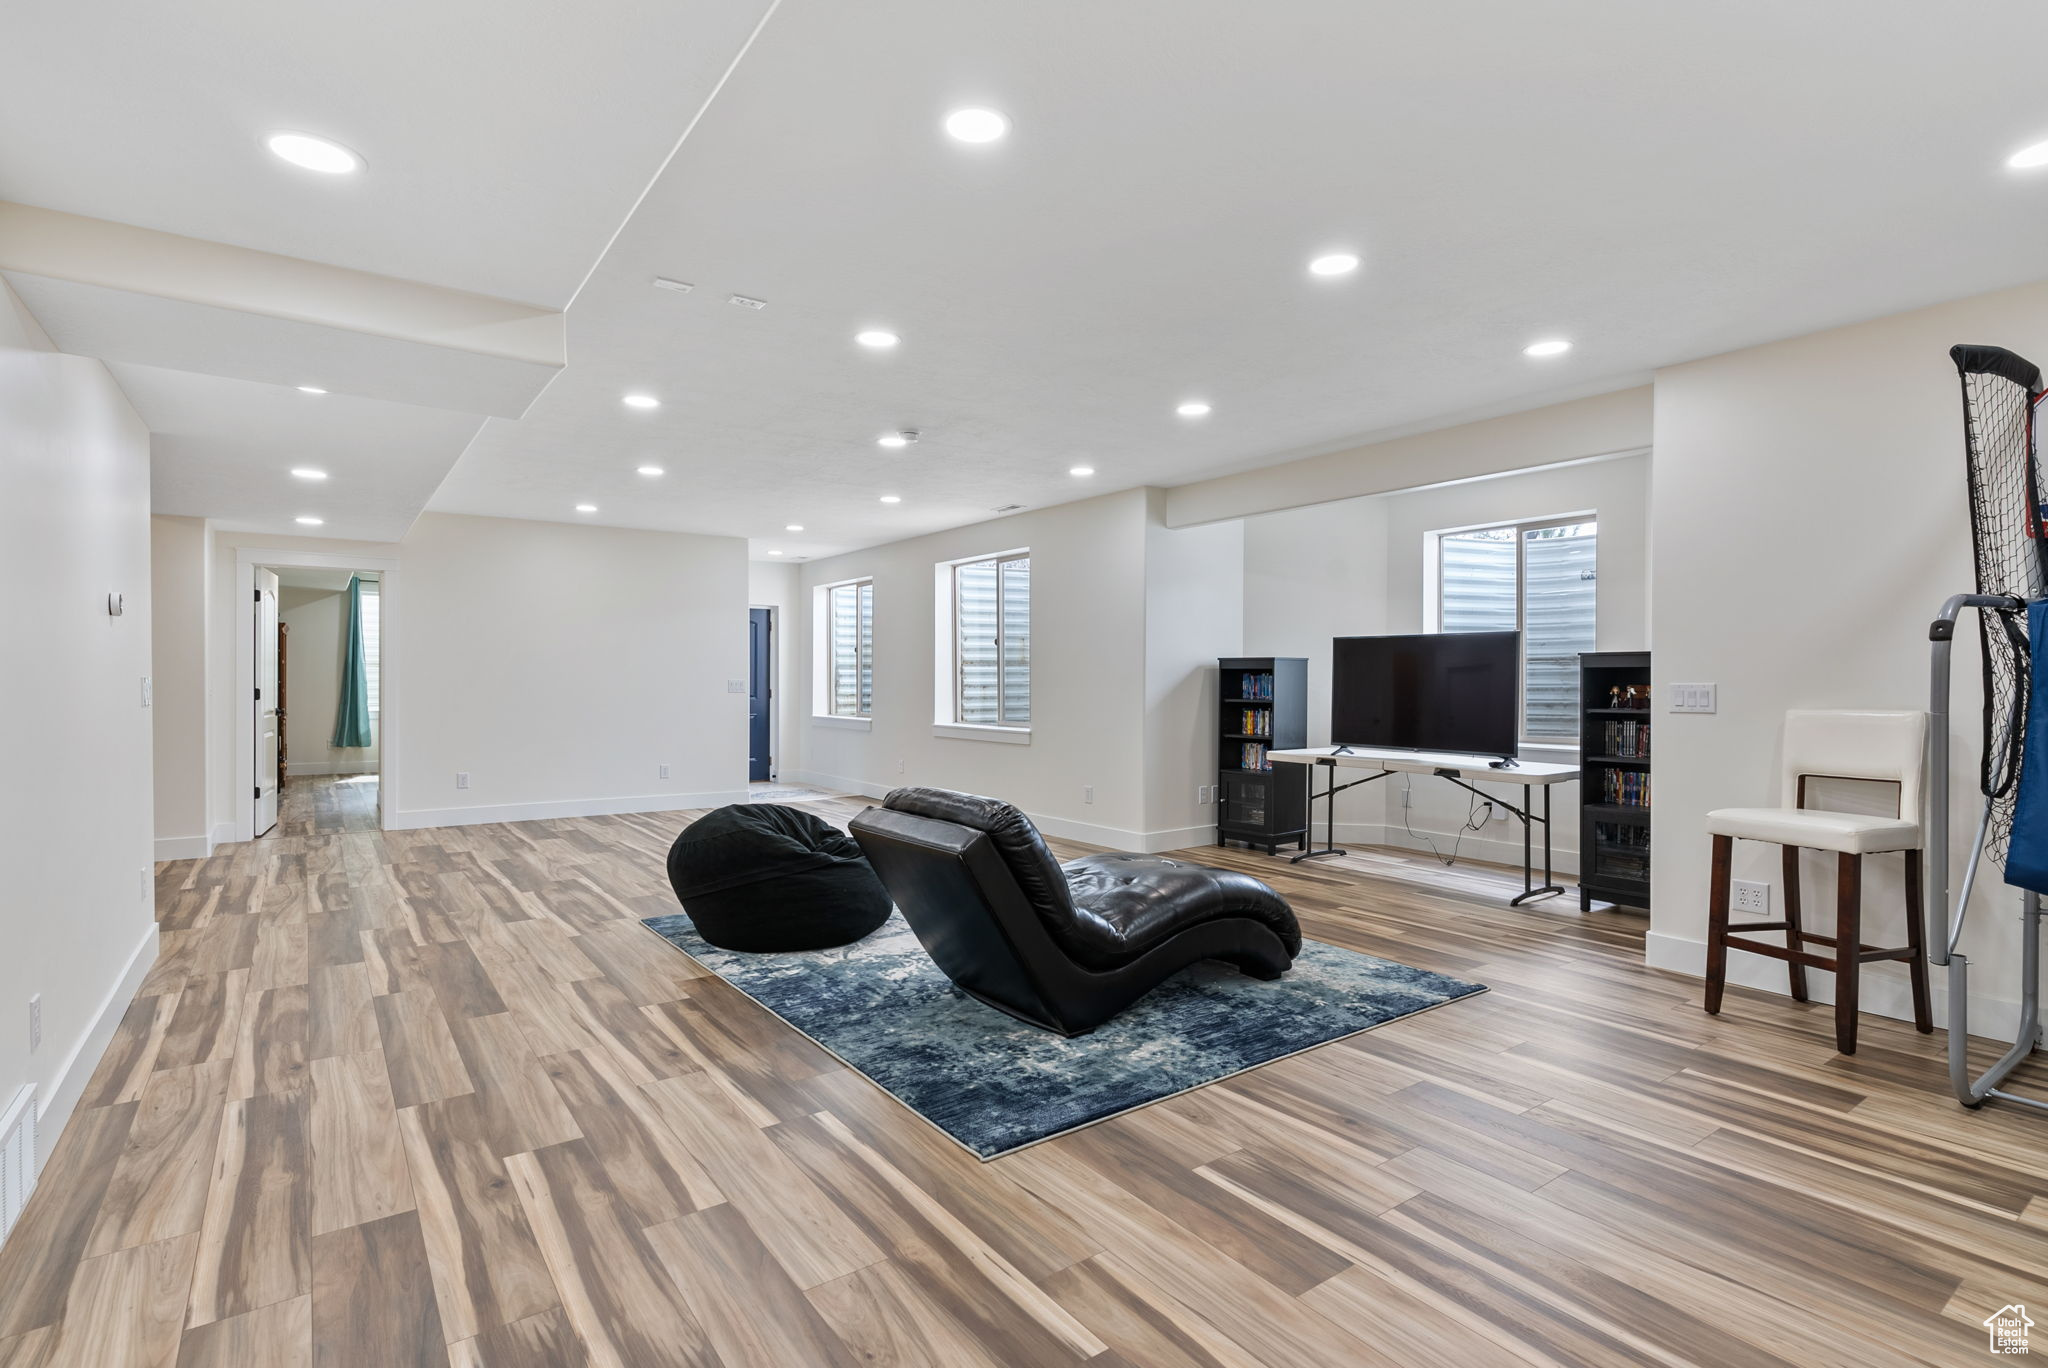 Family Room with light hardwood / wood-style floors